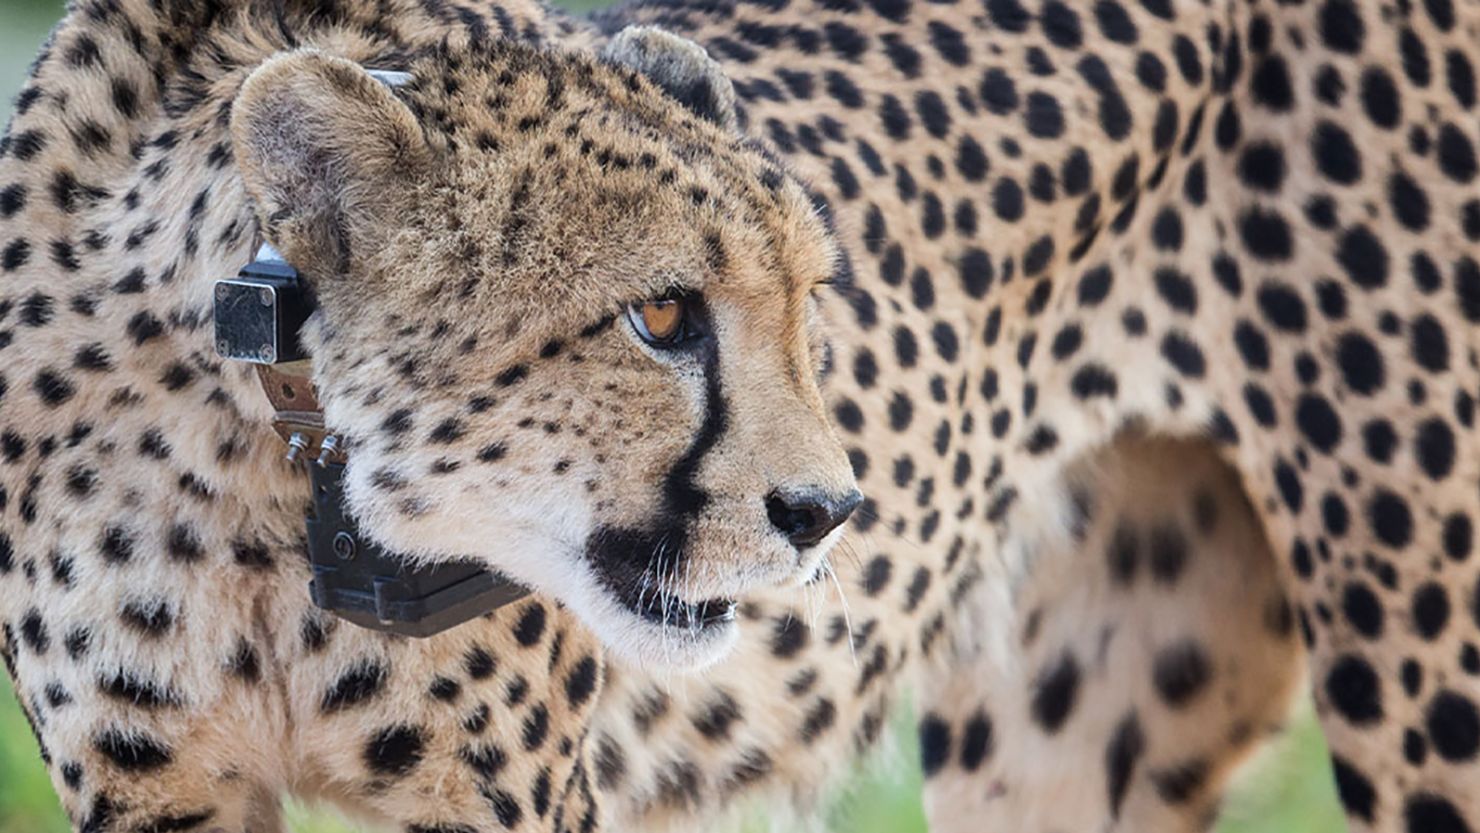 Namibian cheetah at Erindi Private Game Reserve in February 2022.